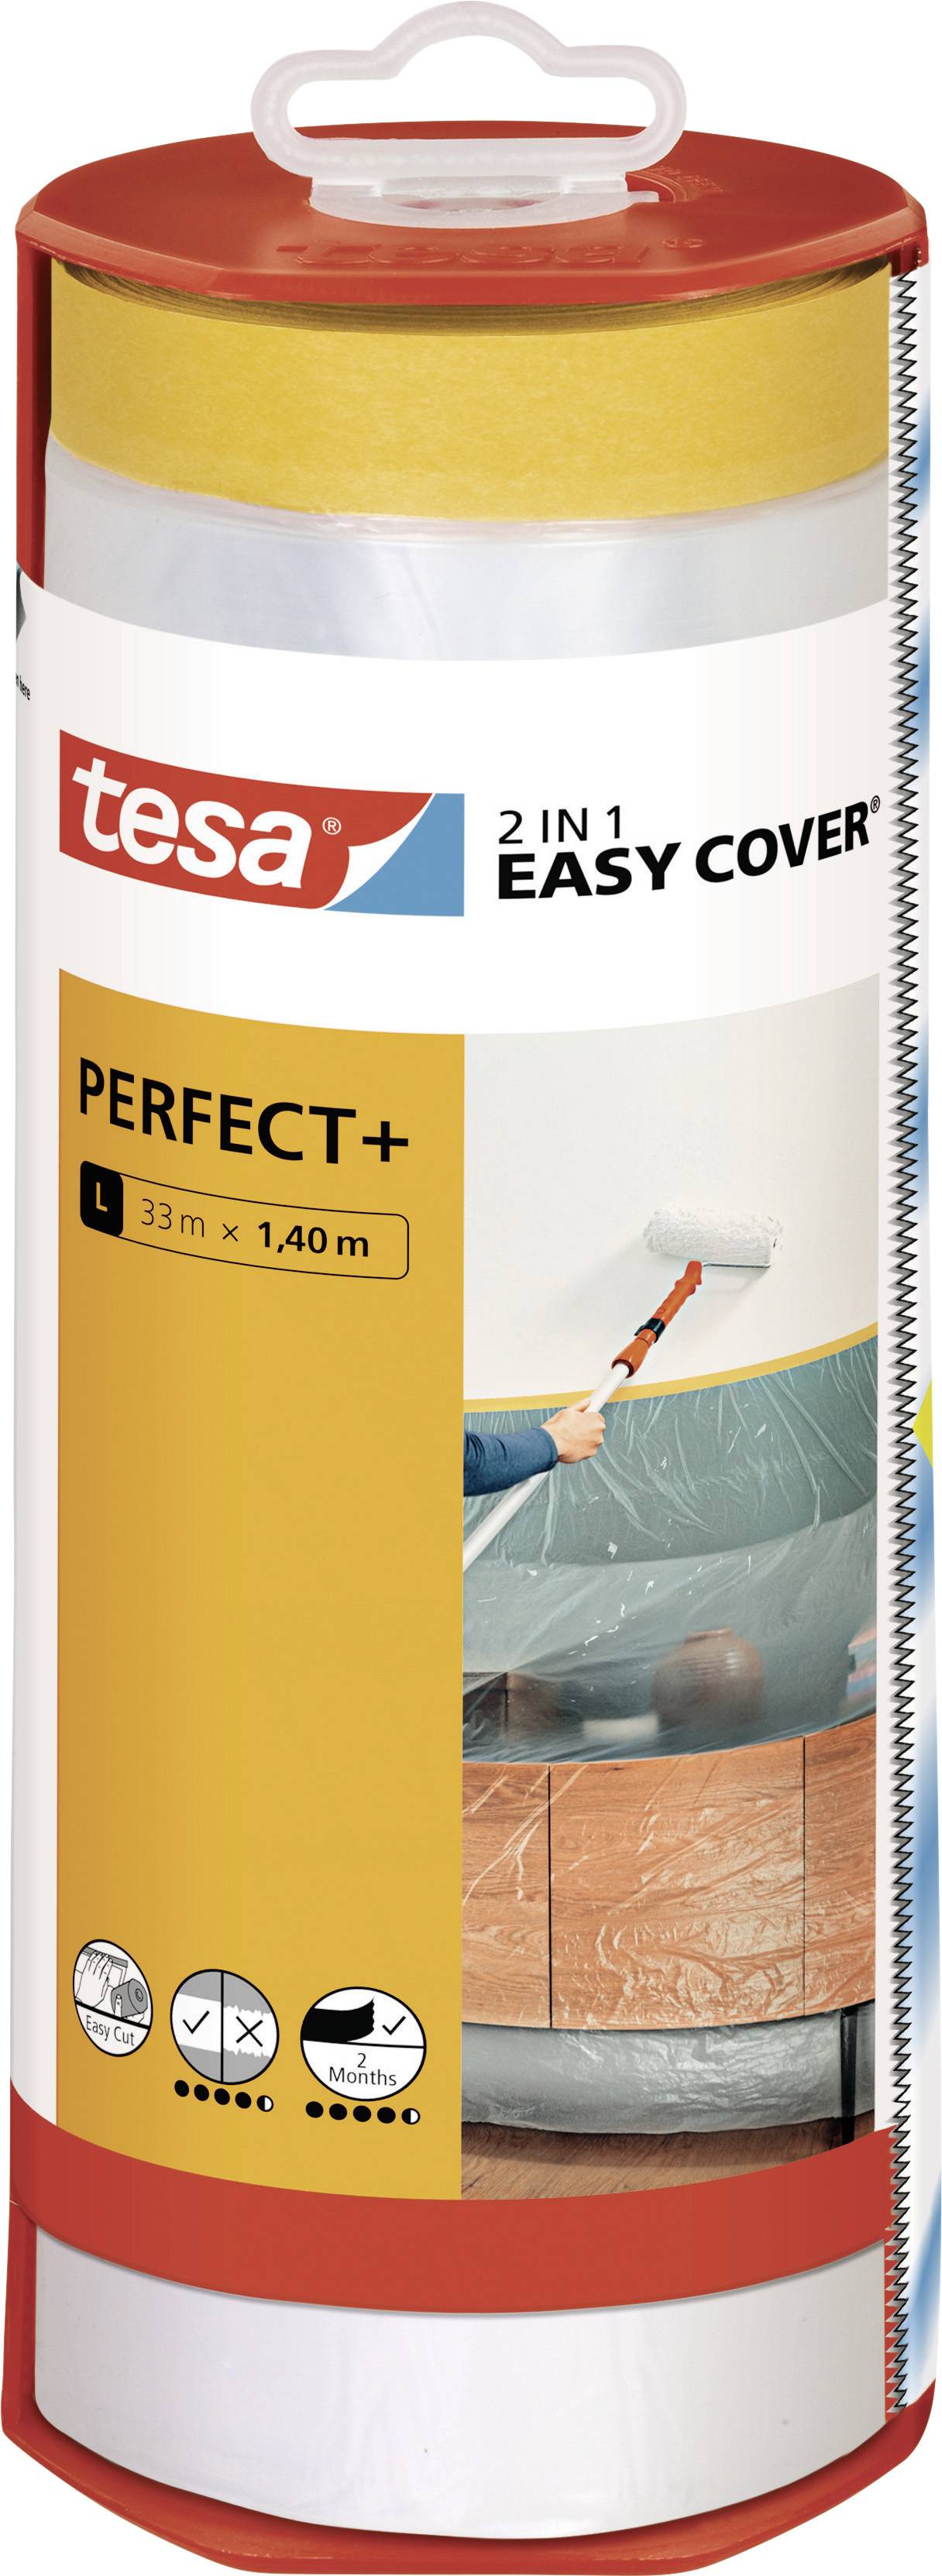 TESA Easy Cover Perfect+ 56571-00000-00 Abdeckfolie Gelb, Transparent (L x B) 33 m x 1.40 m 1 S